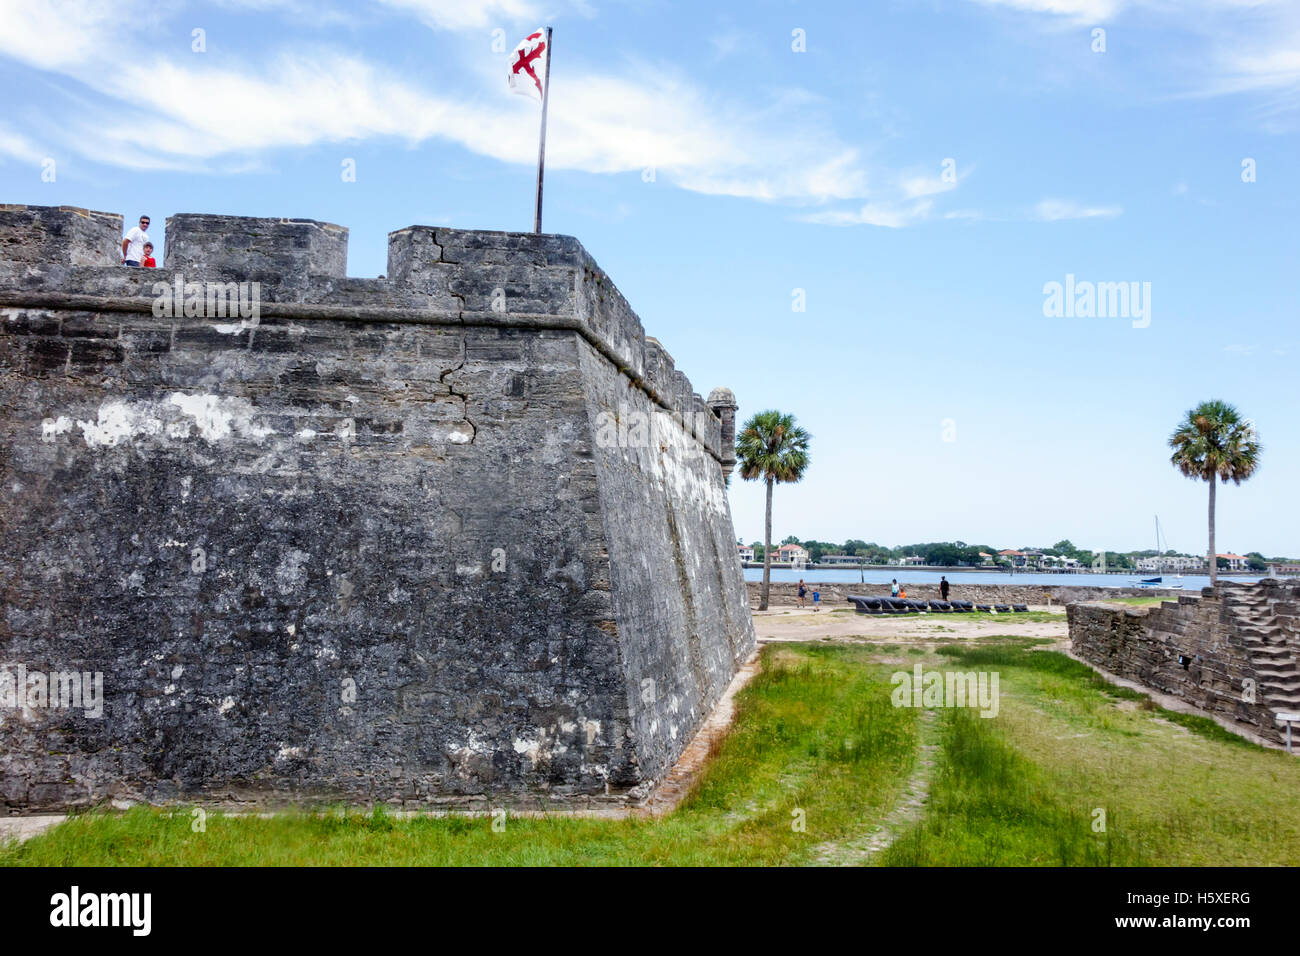 St. Saint Augustine Florida,Castillo de San Marcos National Monument,historic fort,coquina masonry,wall,FL160802059 Stock Photo